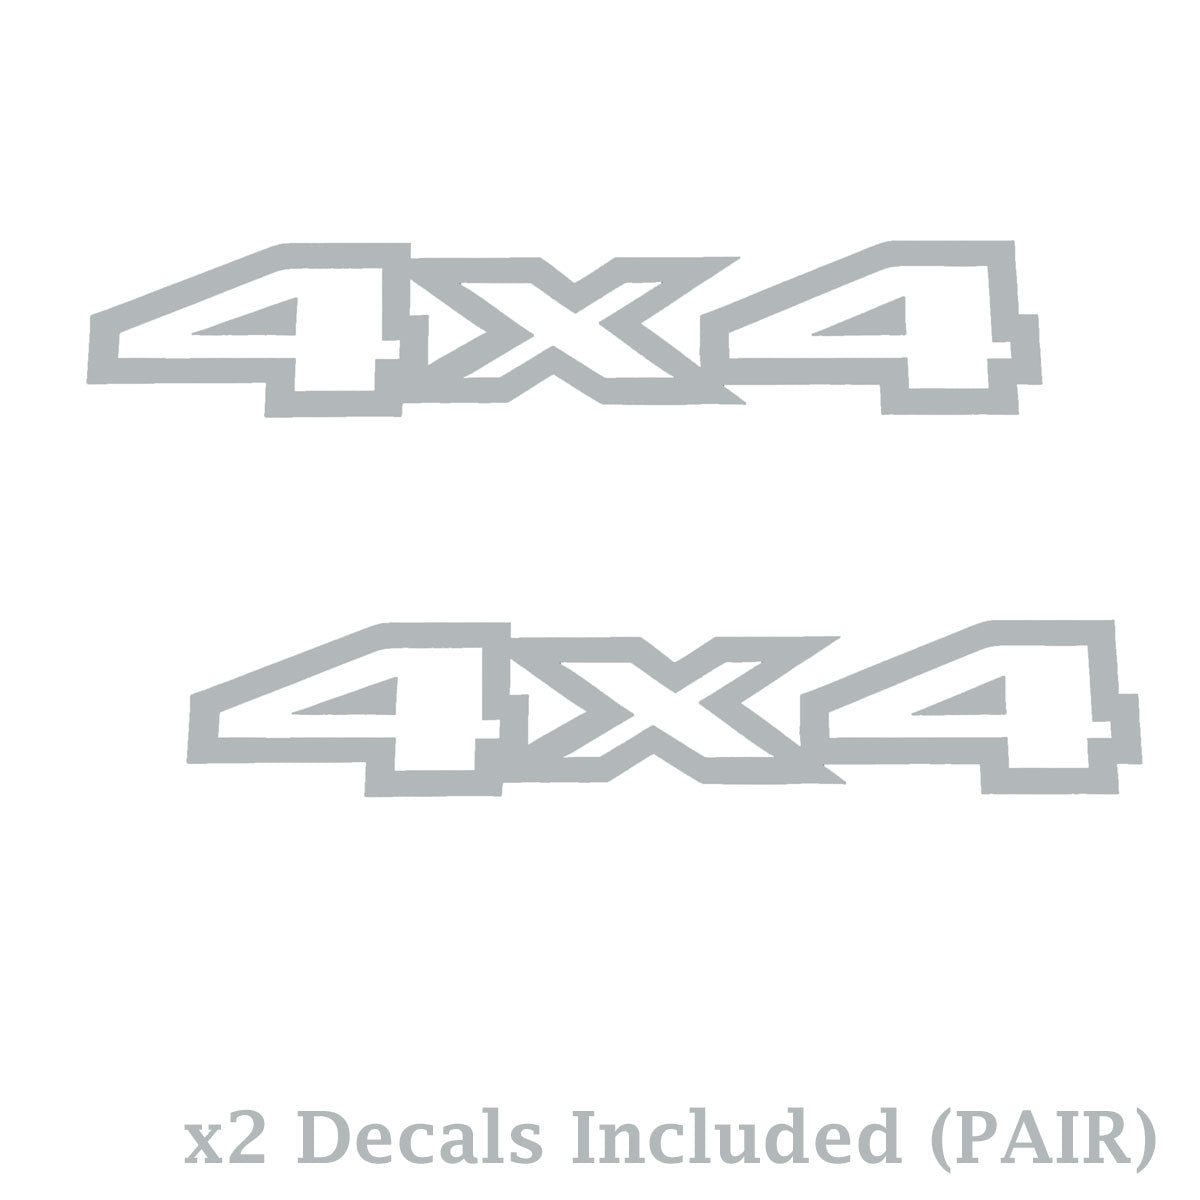 4x4 Decal (Pair) - Black, White, Gold, Silver